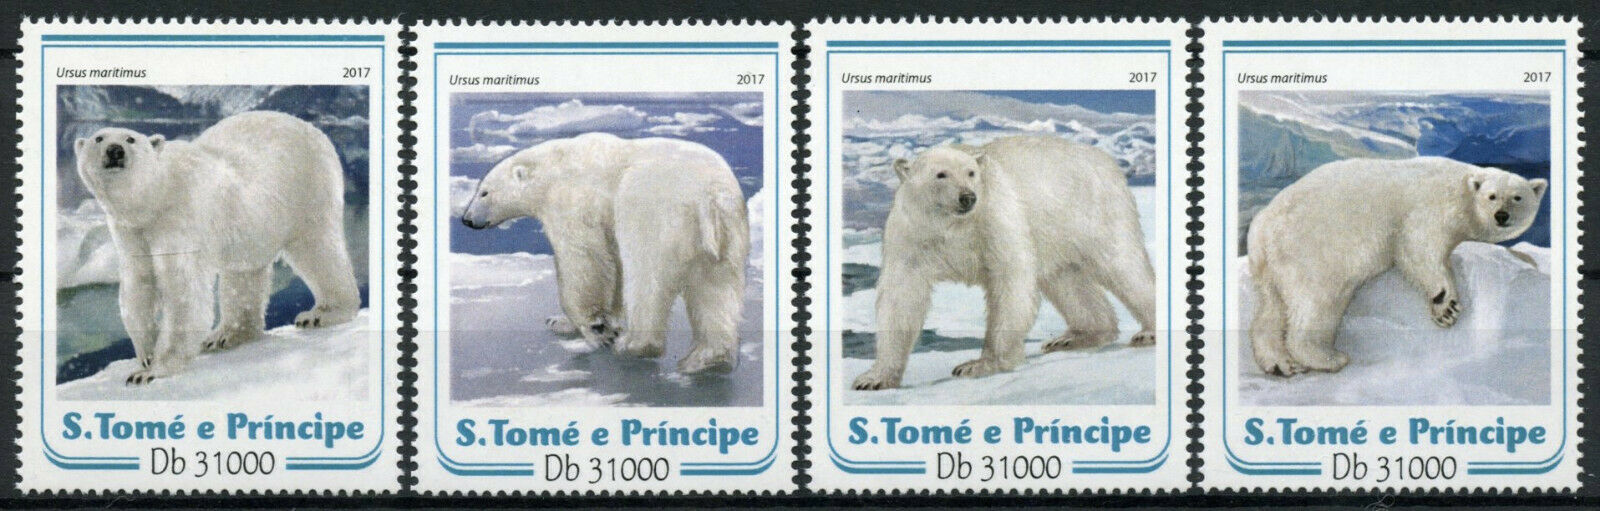 Sao Tome & Principe Wild Animals Stamps 2017 MNH Polar Bears Bear Fauna 4v Set